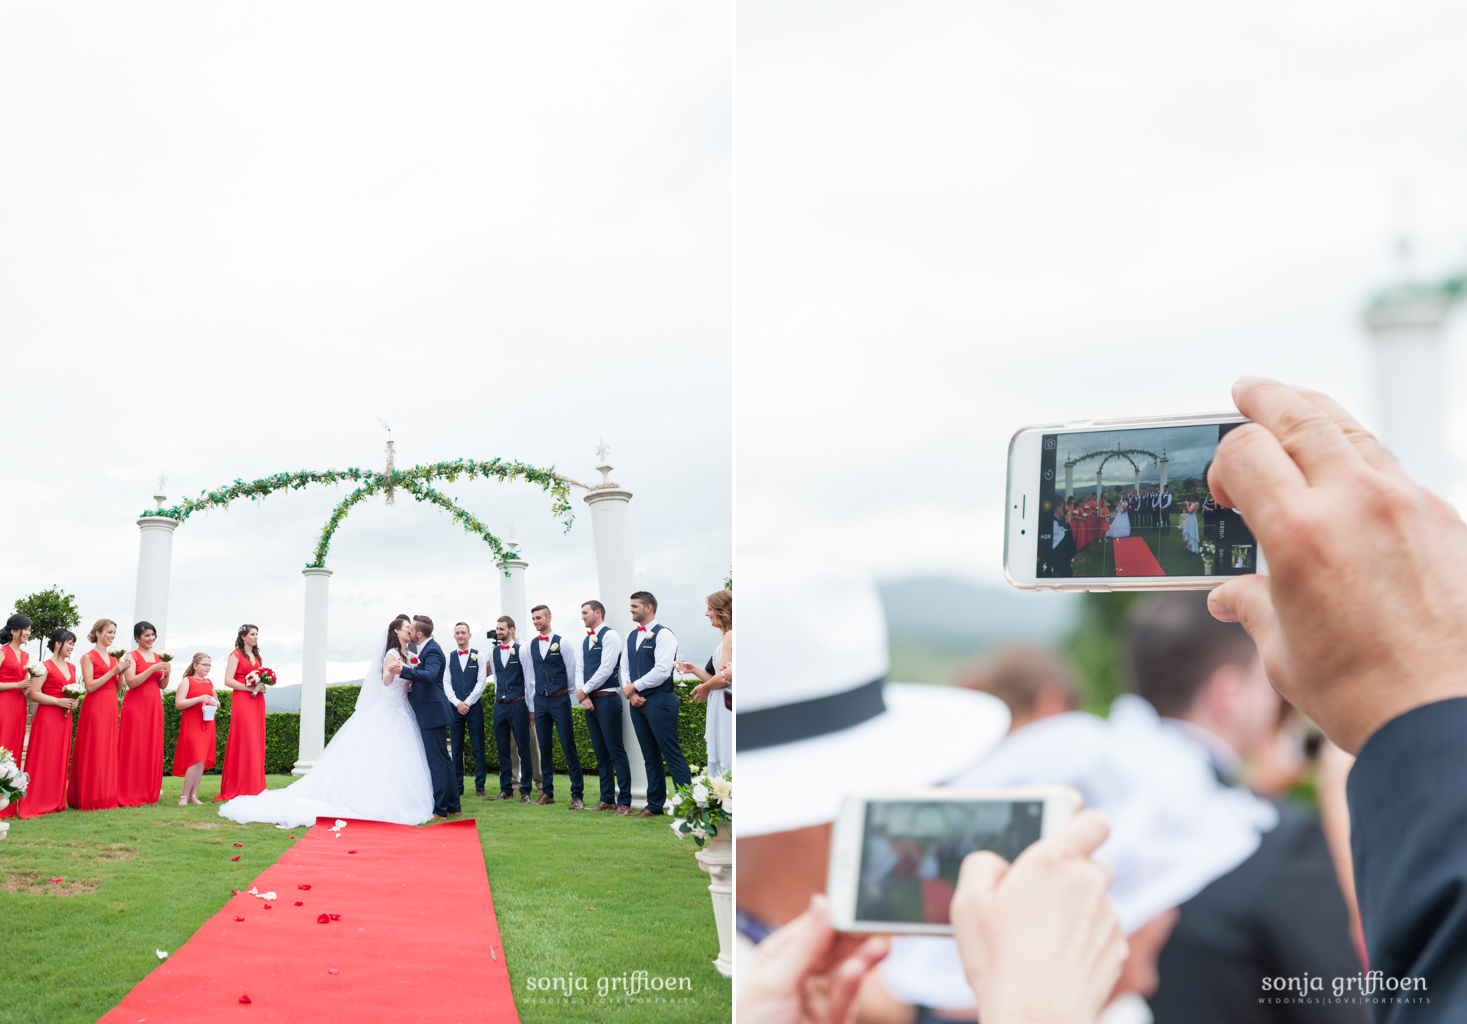 Walther-Wedding-Ceremony-Brisbane-Wedding-Photographer-Sonja-Griffioen-27-copy.jpg